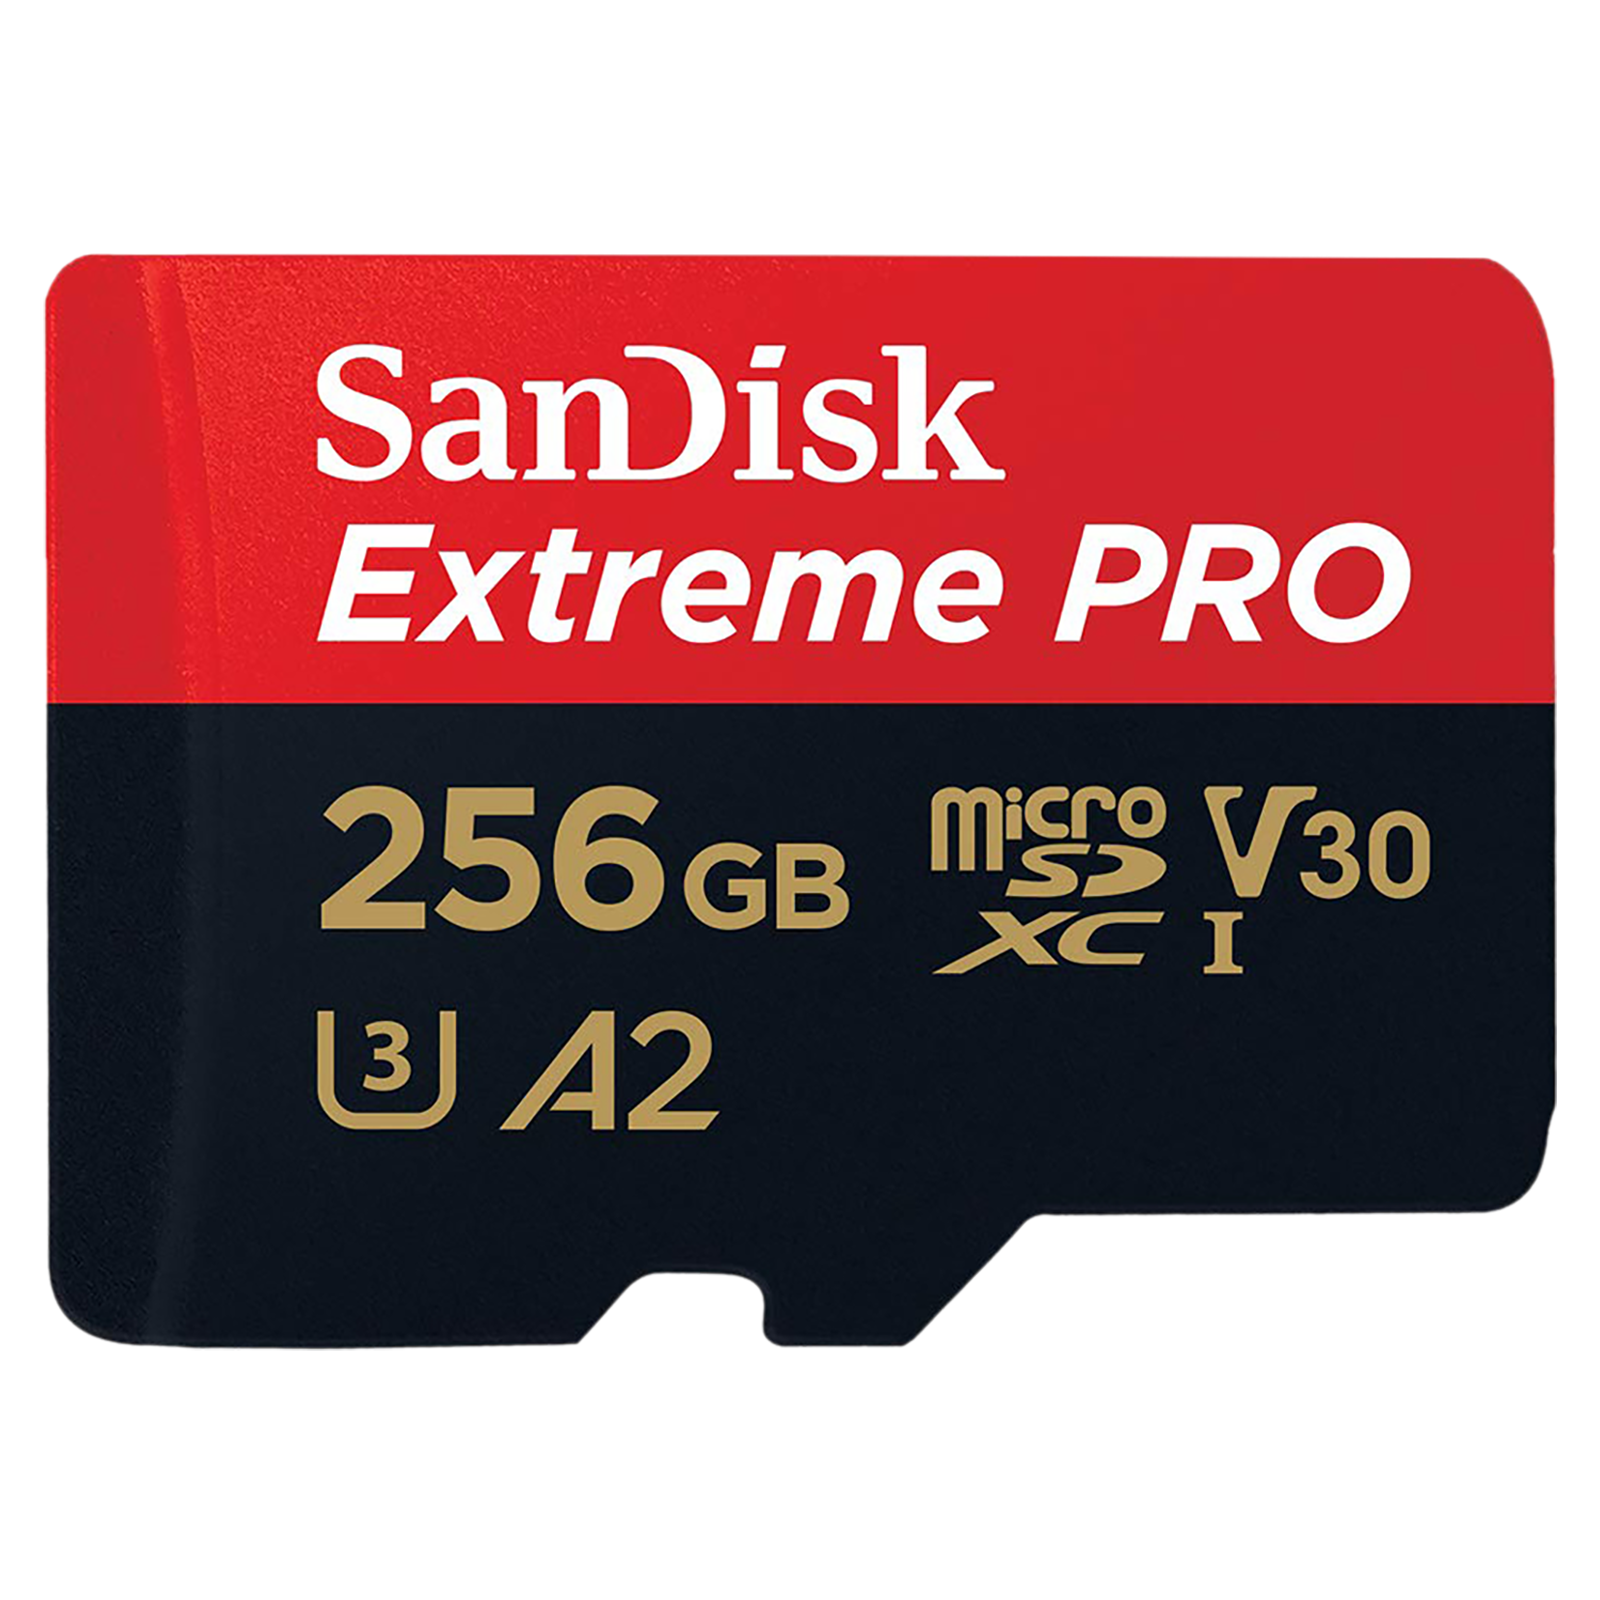 SanDisk Extreme Pro MicroSDXC 256GB Class 3 200MB/s Memory Card